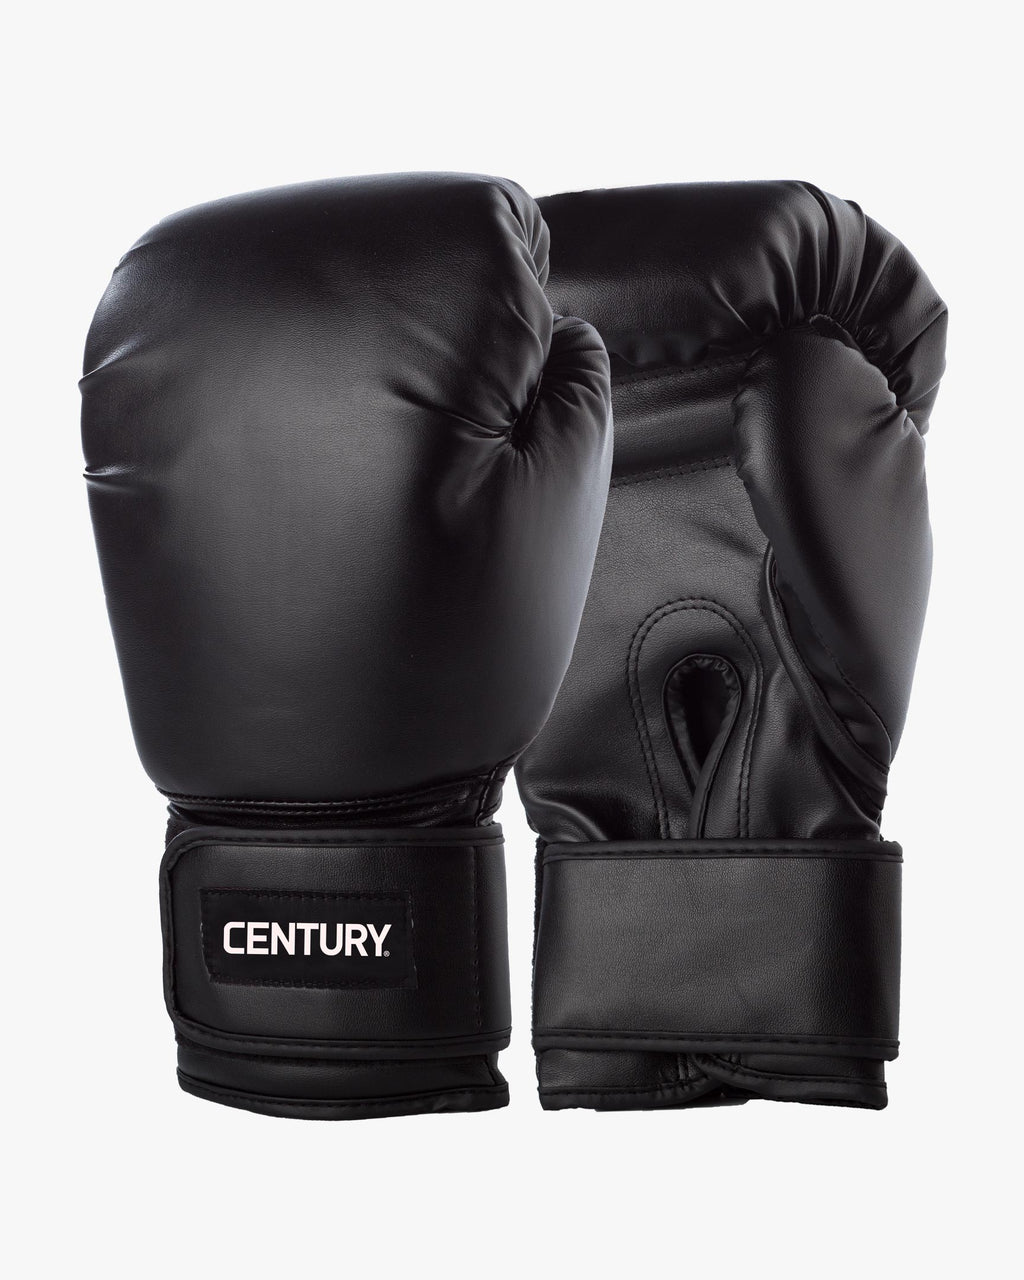 Century Boxing Glove